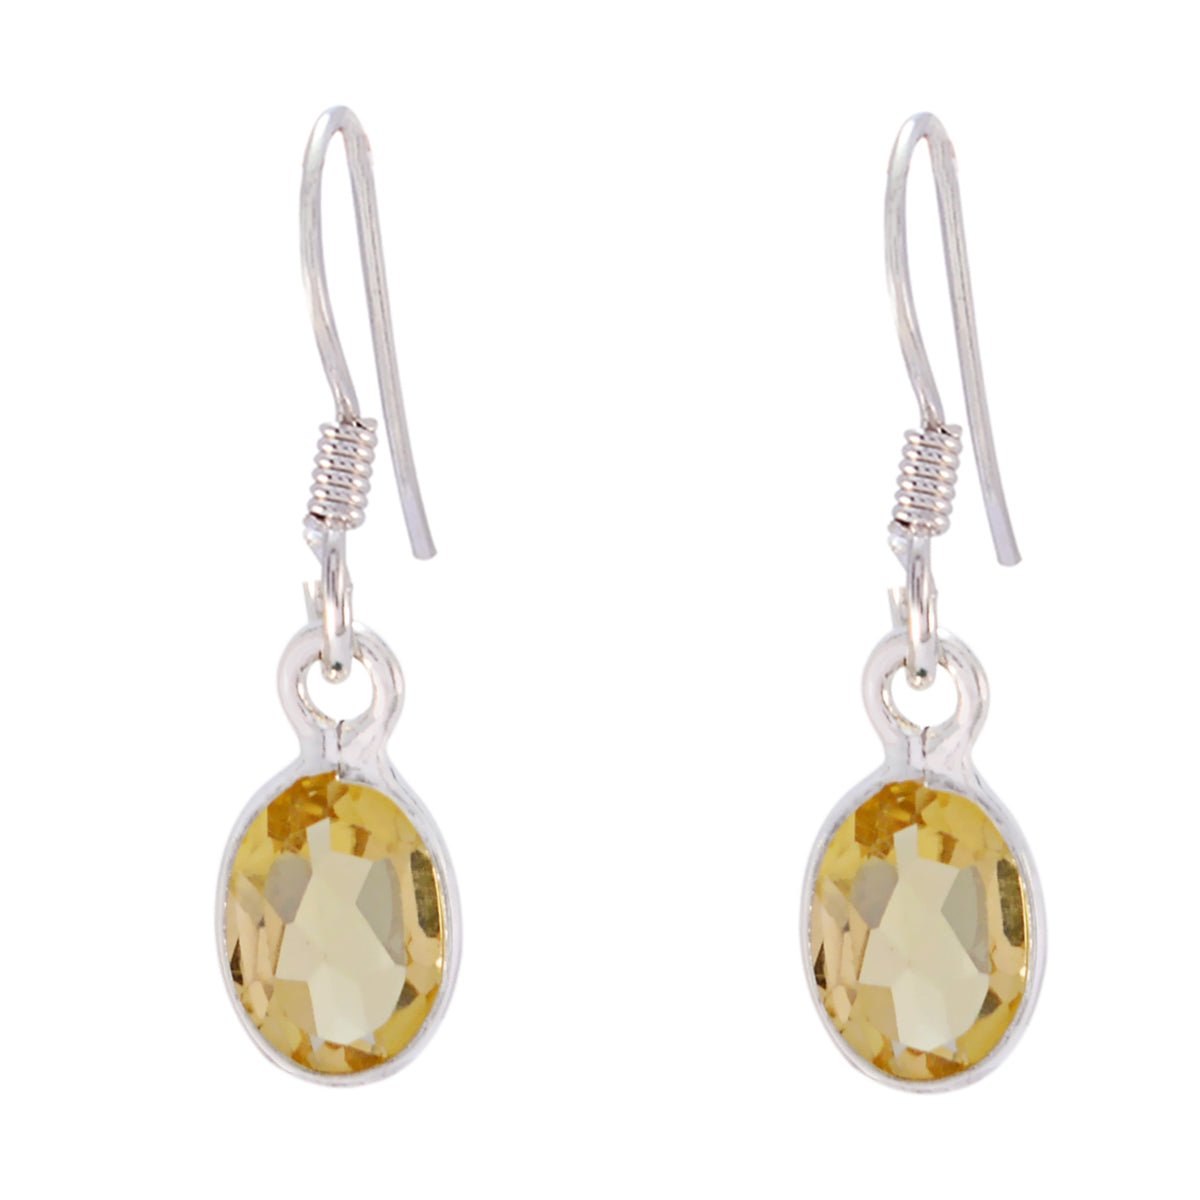 Riyo Good Gemstones round Faceted Yellow Citrine Silver Earring gift